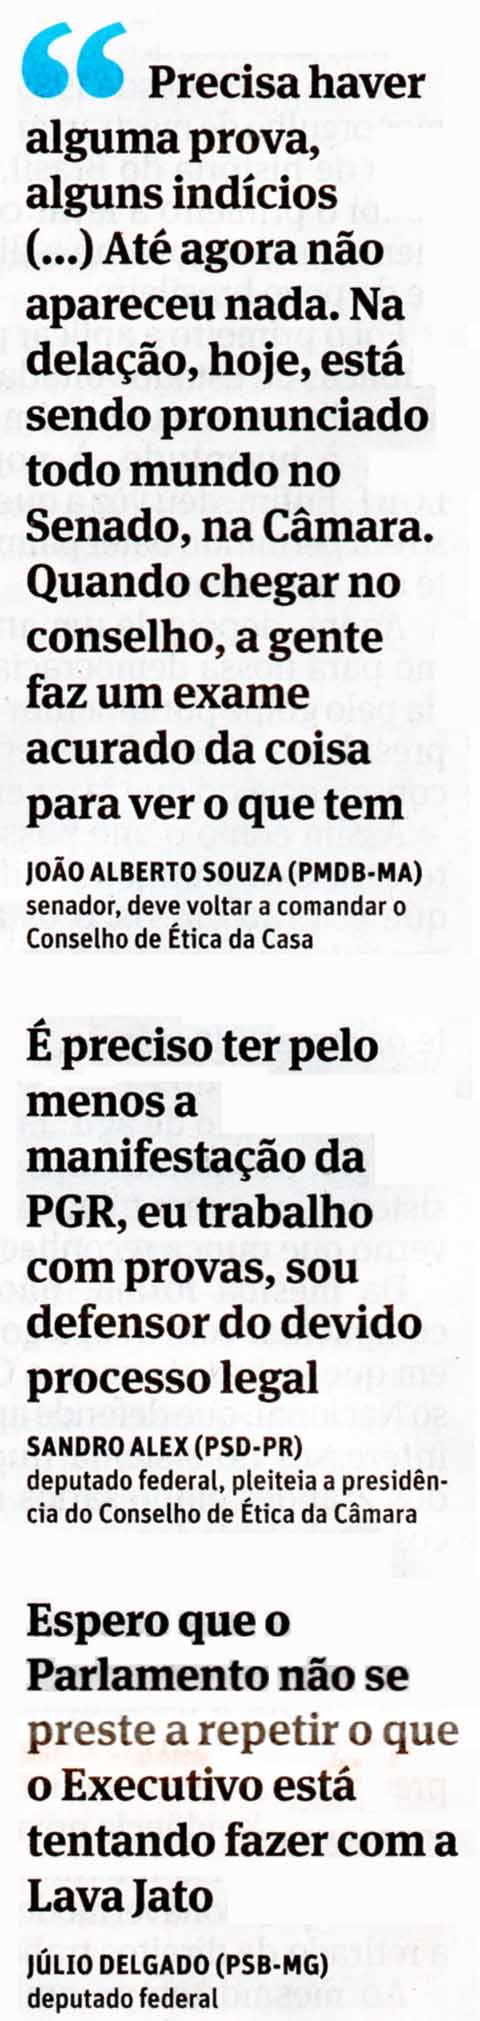 Lava Jato: A blindagem dos polticos - Folha de So Paulo / 20.02.2017